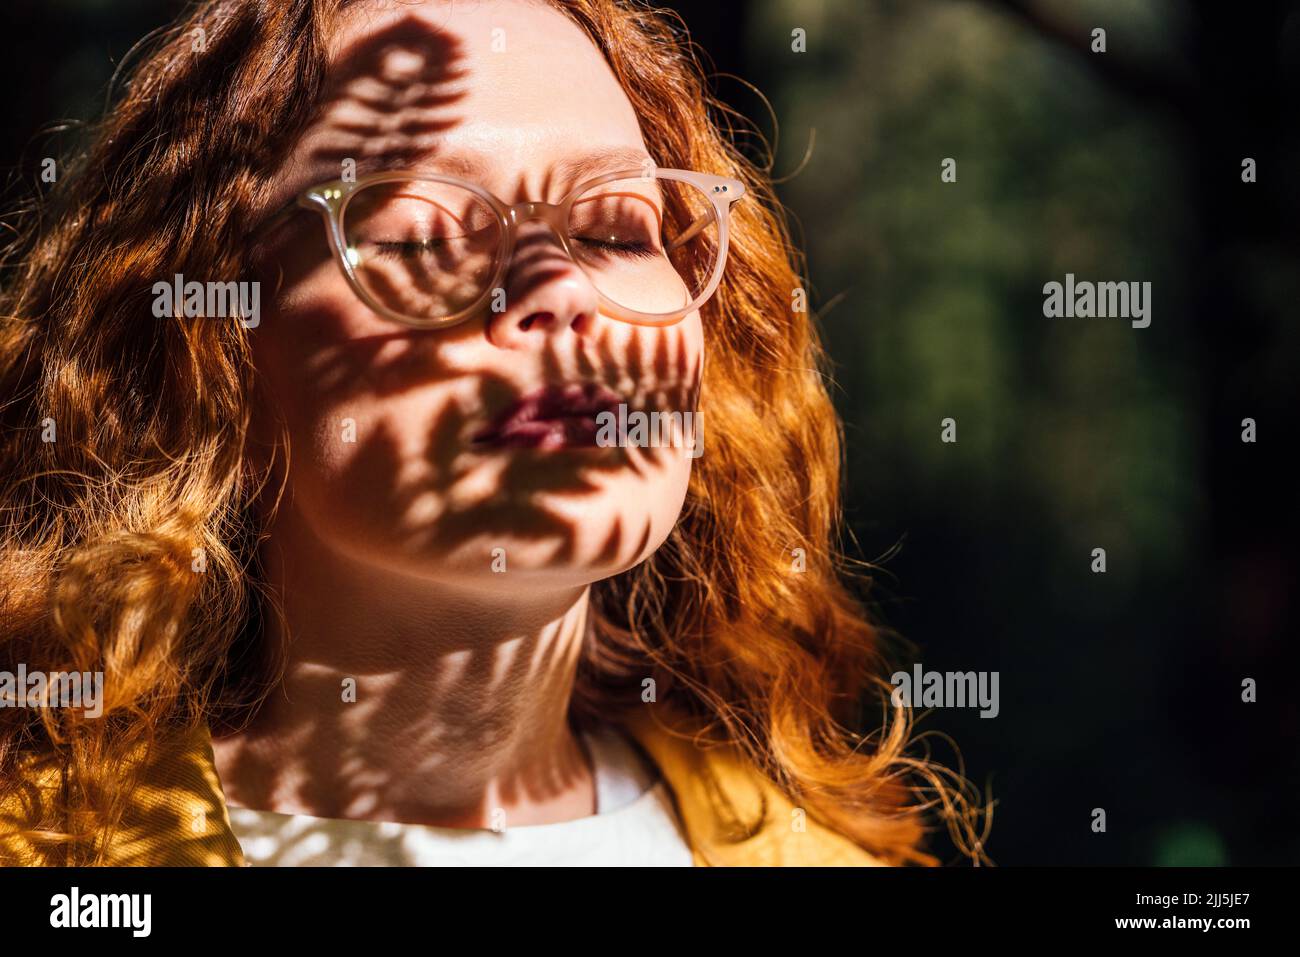 Woman with eyes closed enjoying sunlight Stock Photo